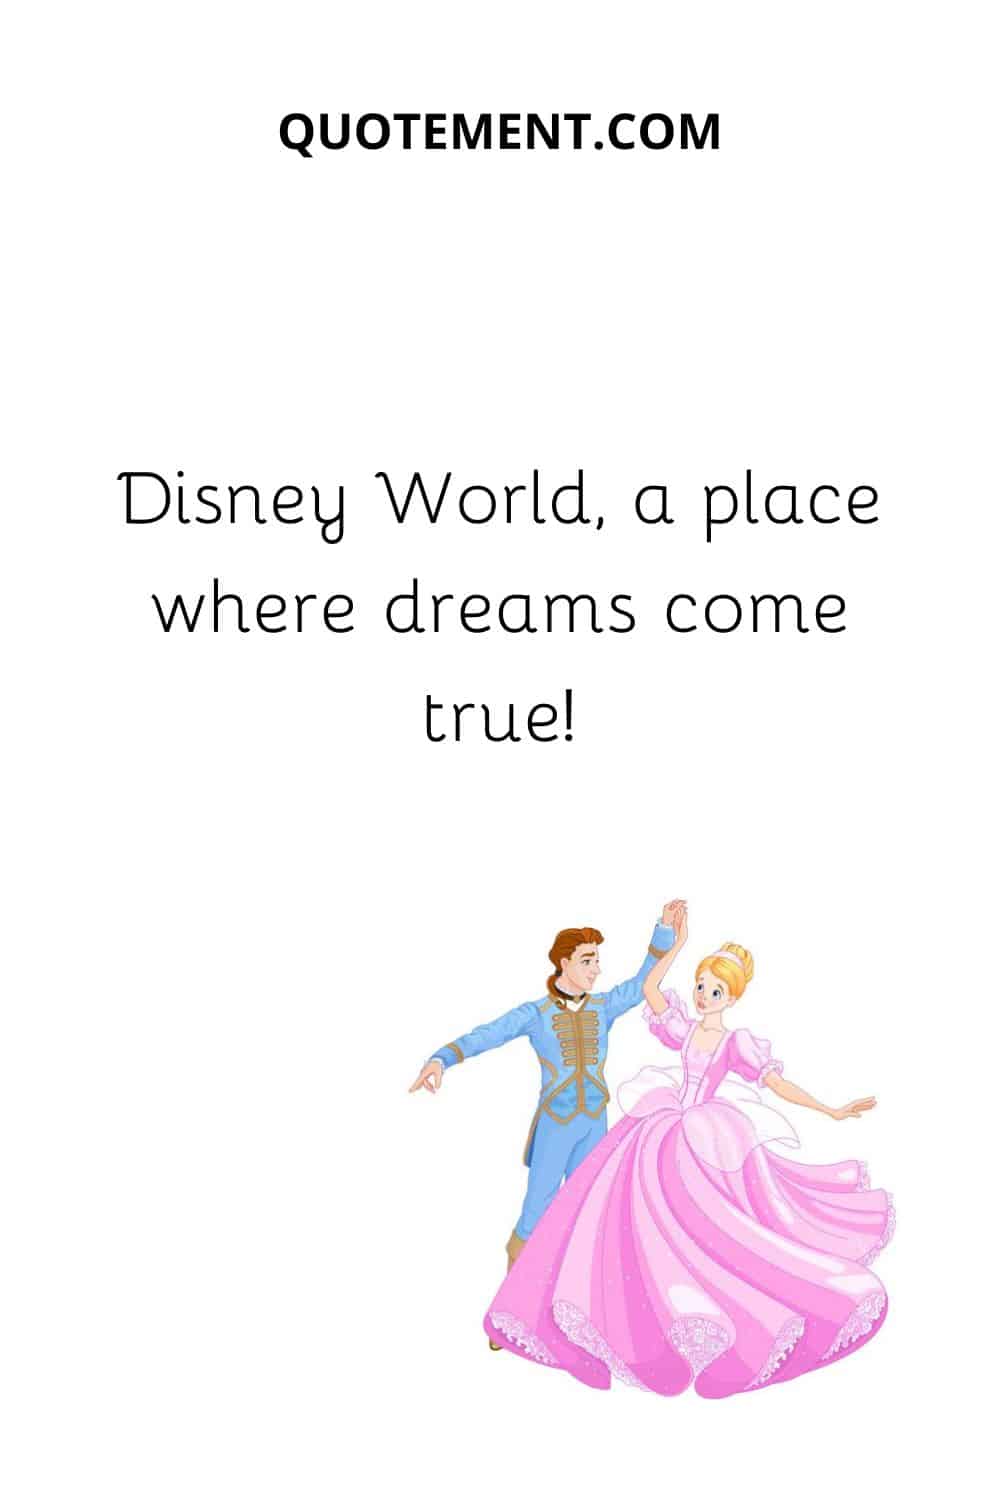 Disney World, a place where dreams come true!